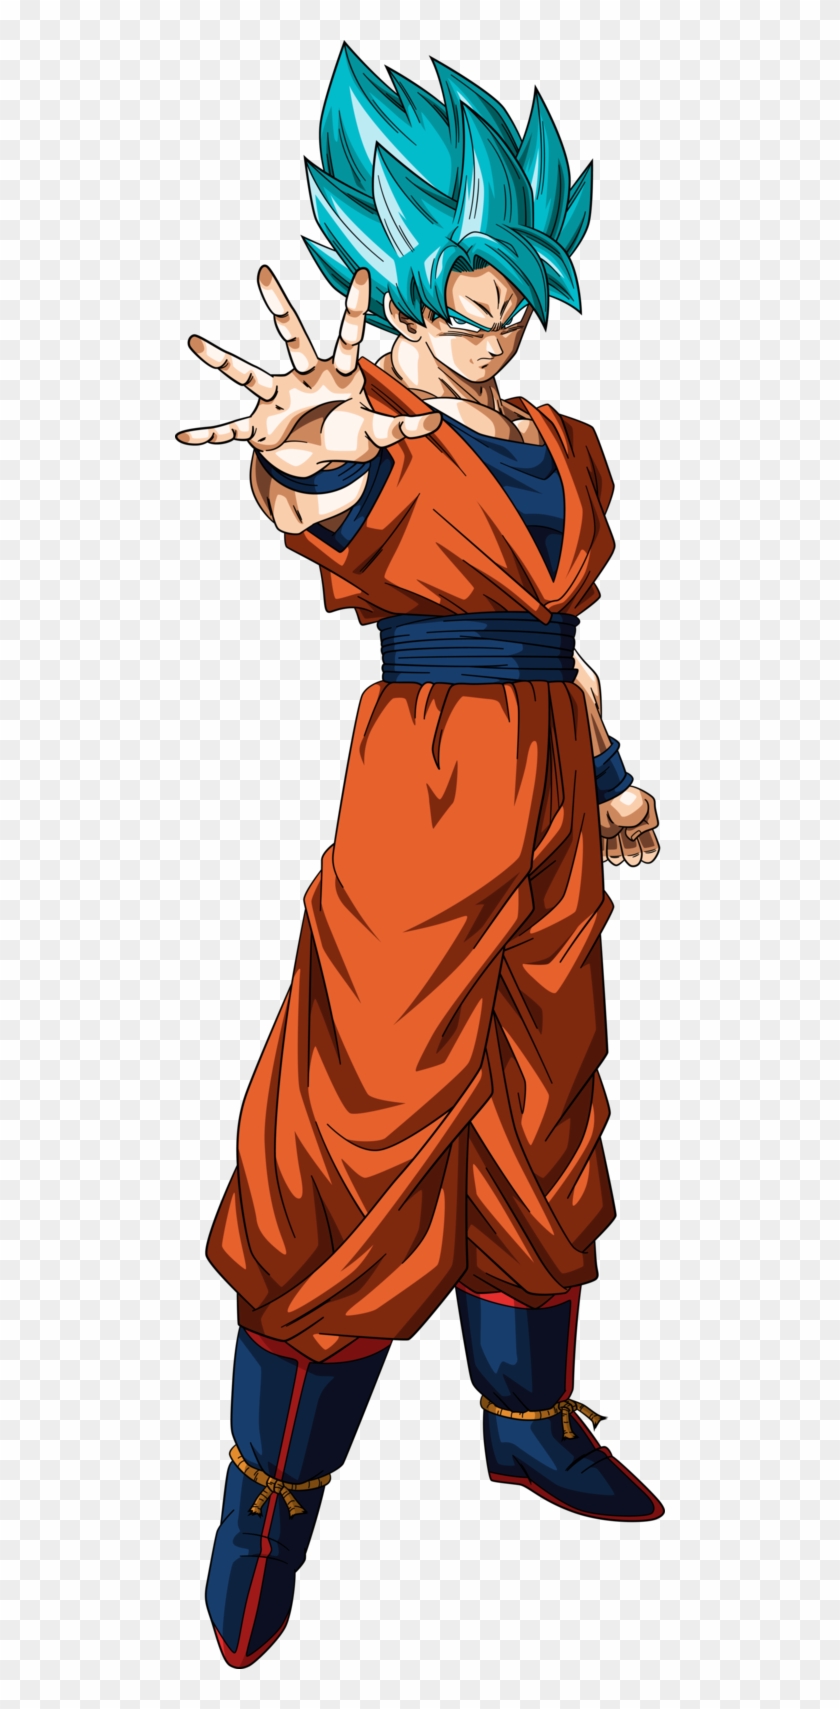 Download Goku Súper Saiyan Blue Más - Goku Super Saiyajin Blue Png